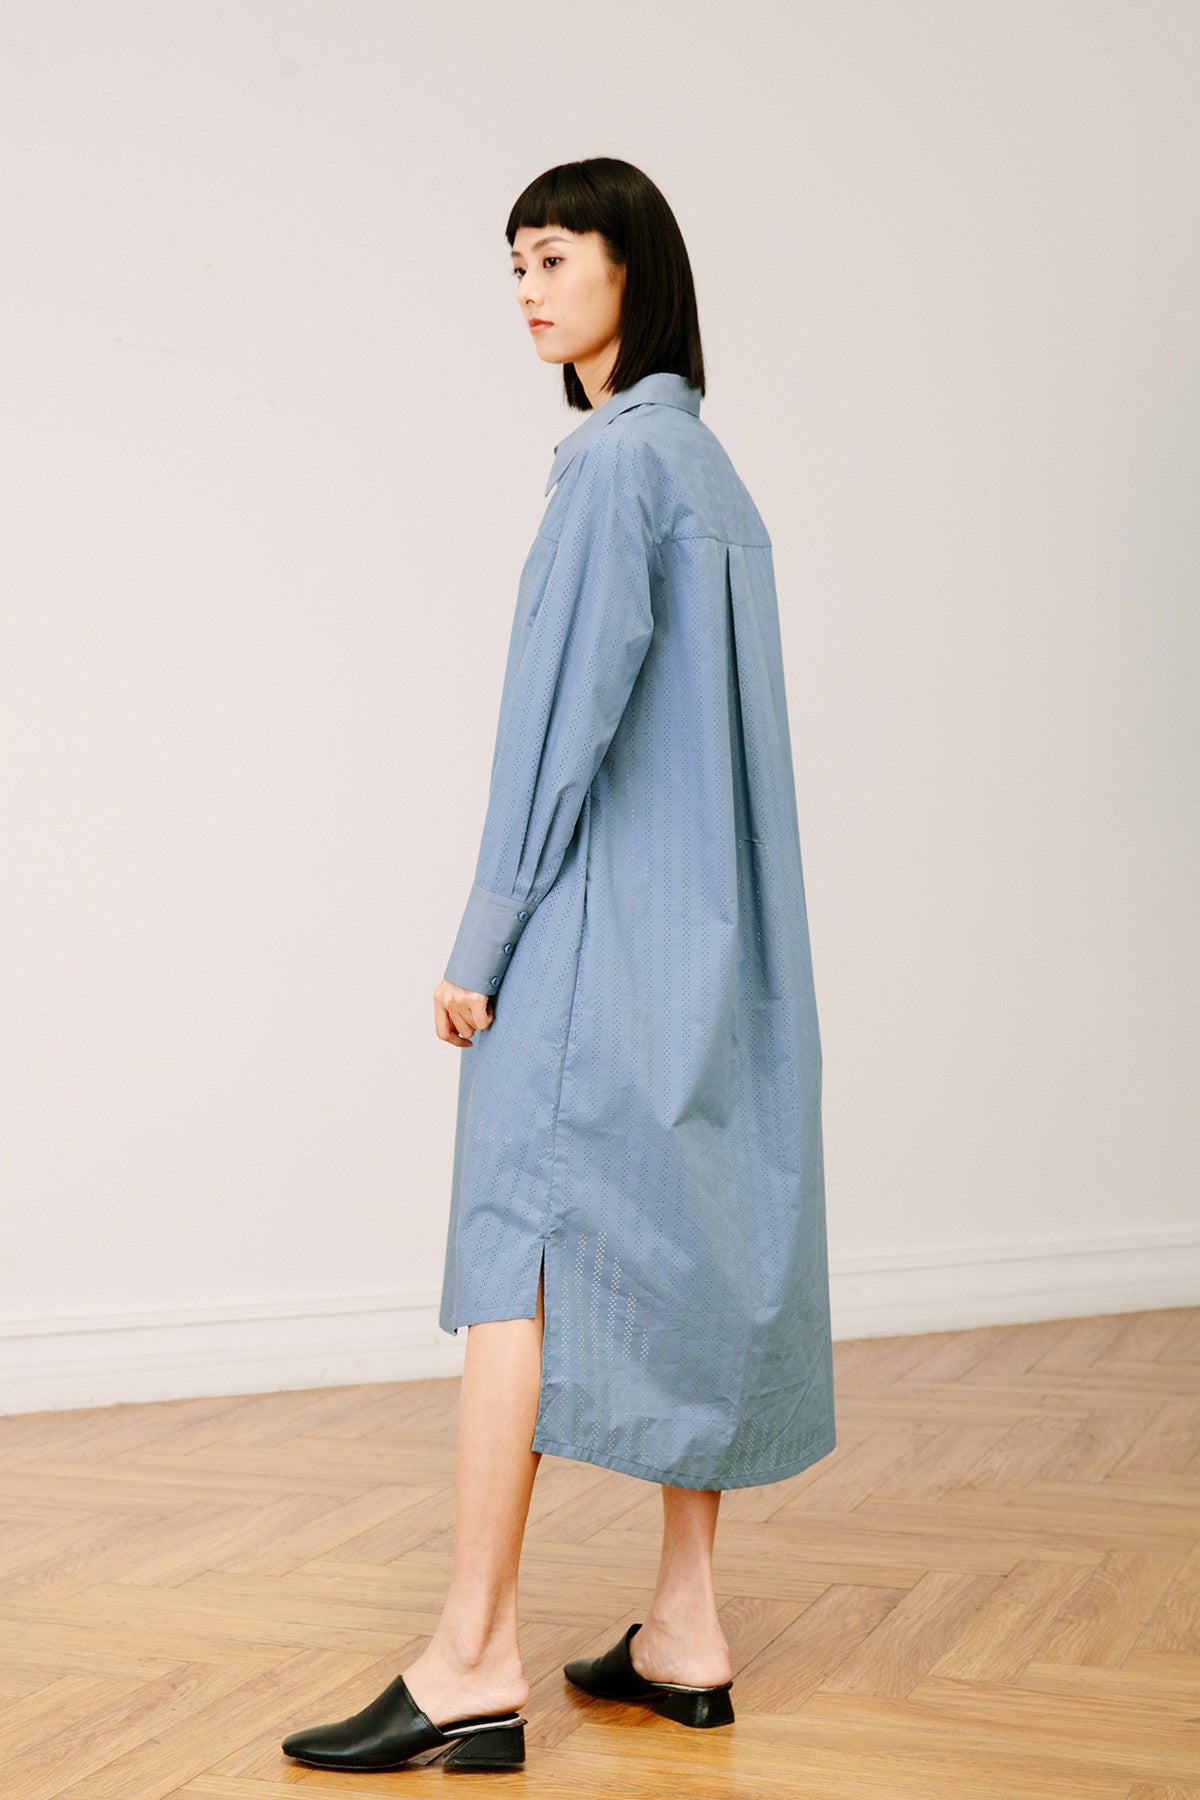 SKYE San Francisco SF California shop ethical sustainable modern chic minimalist luxury clothing women fashion Olivia Shirt Dress blue 6